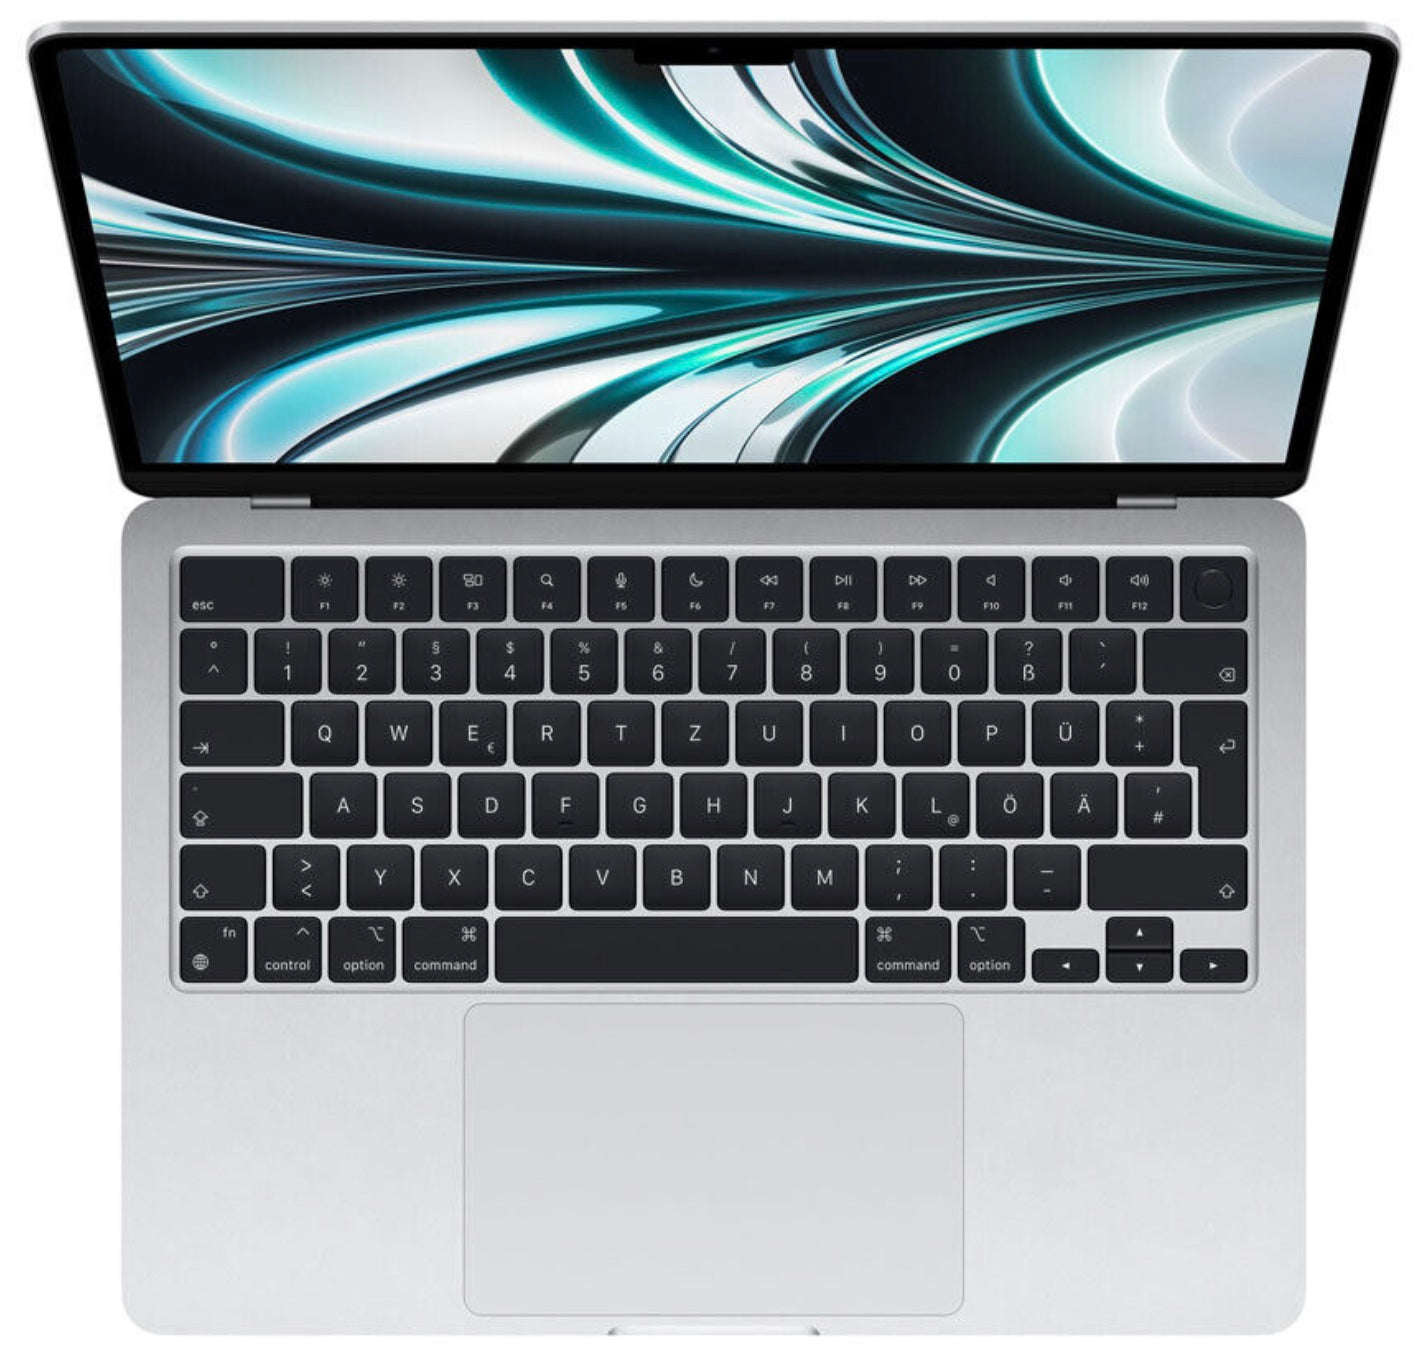 Apple MacBook AIR 13,6 Zoll ✅, 2022, M2-Chip, 8 GB RAM, 256 GB Speicher, silber, NEU ✅ OVP 🛑 0️⃣2️⃣ ab Lager